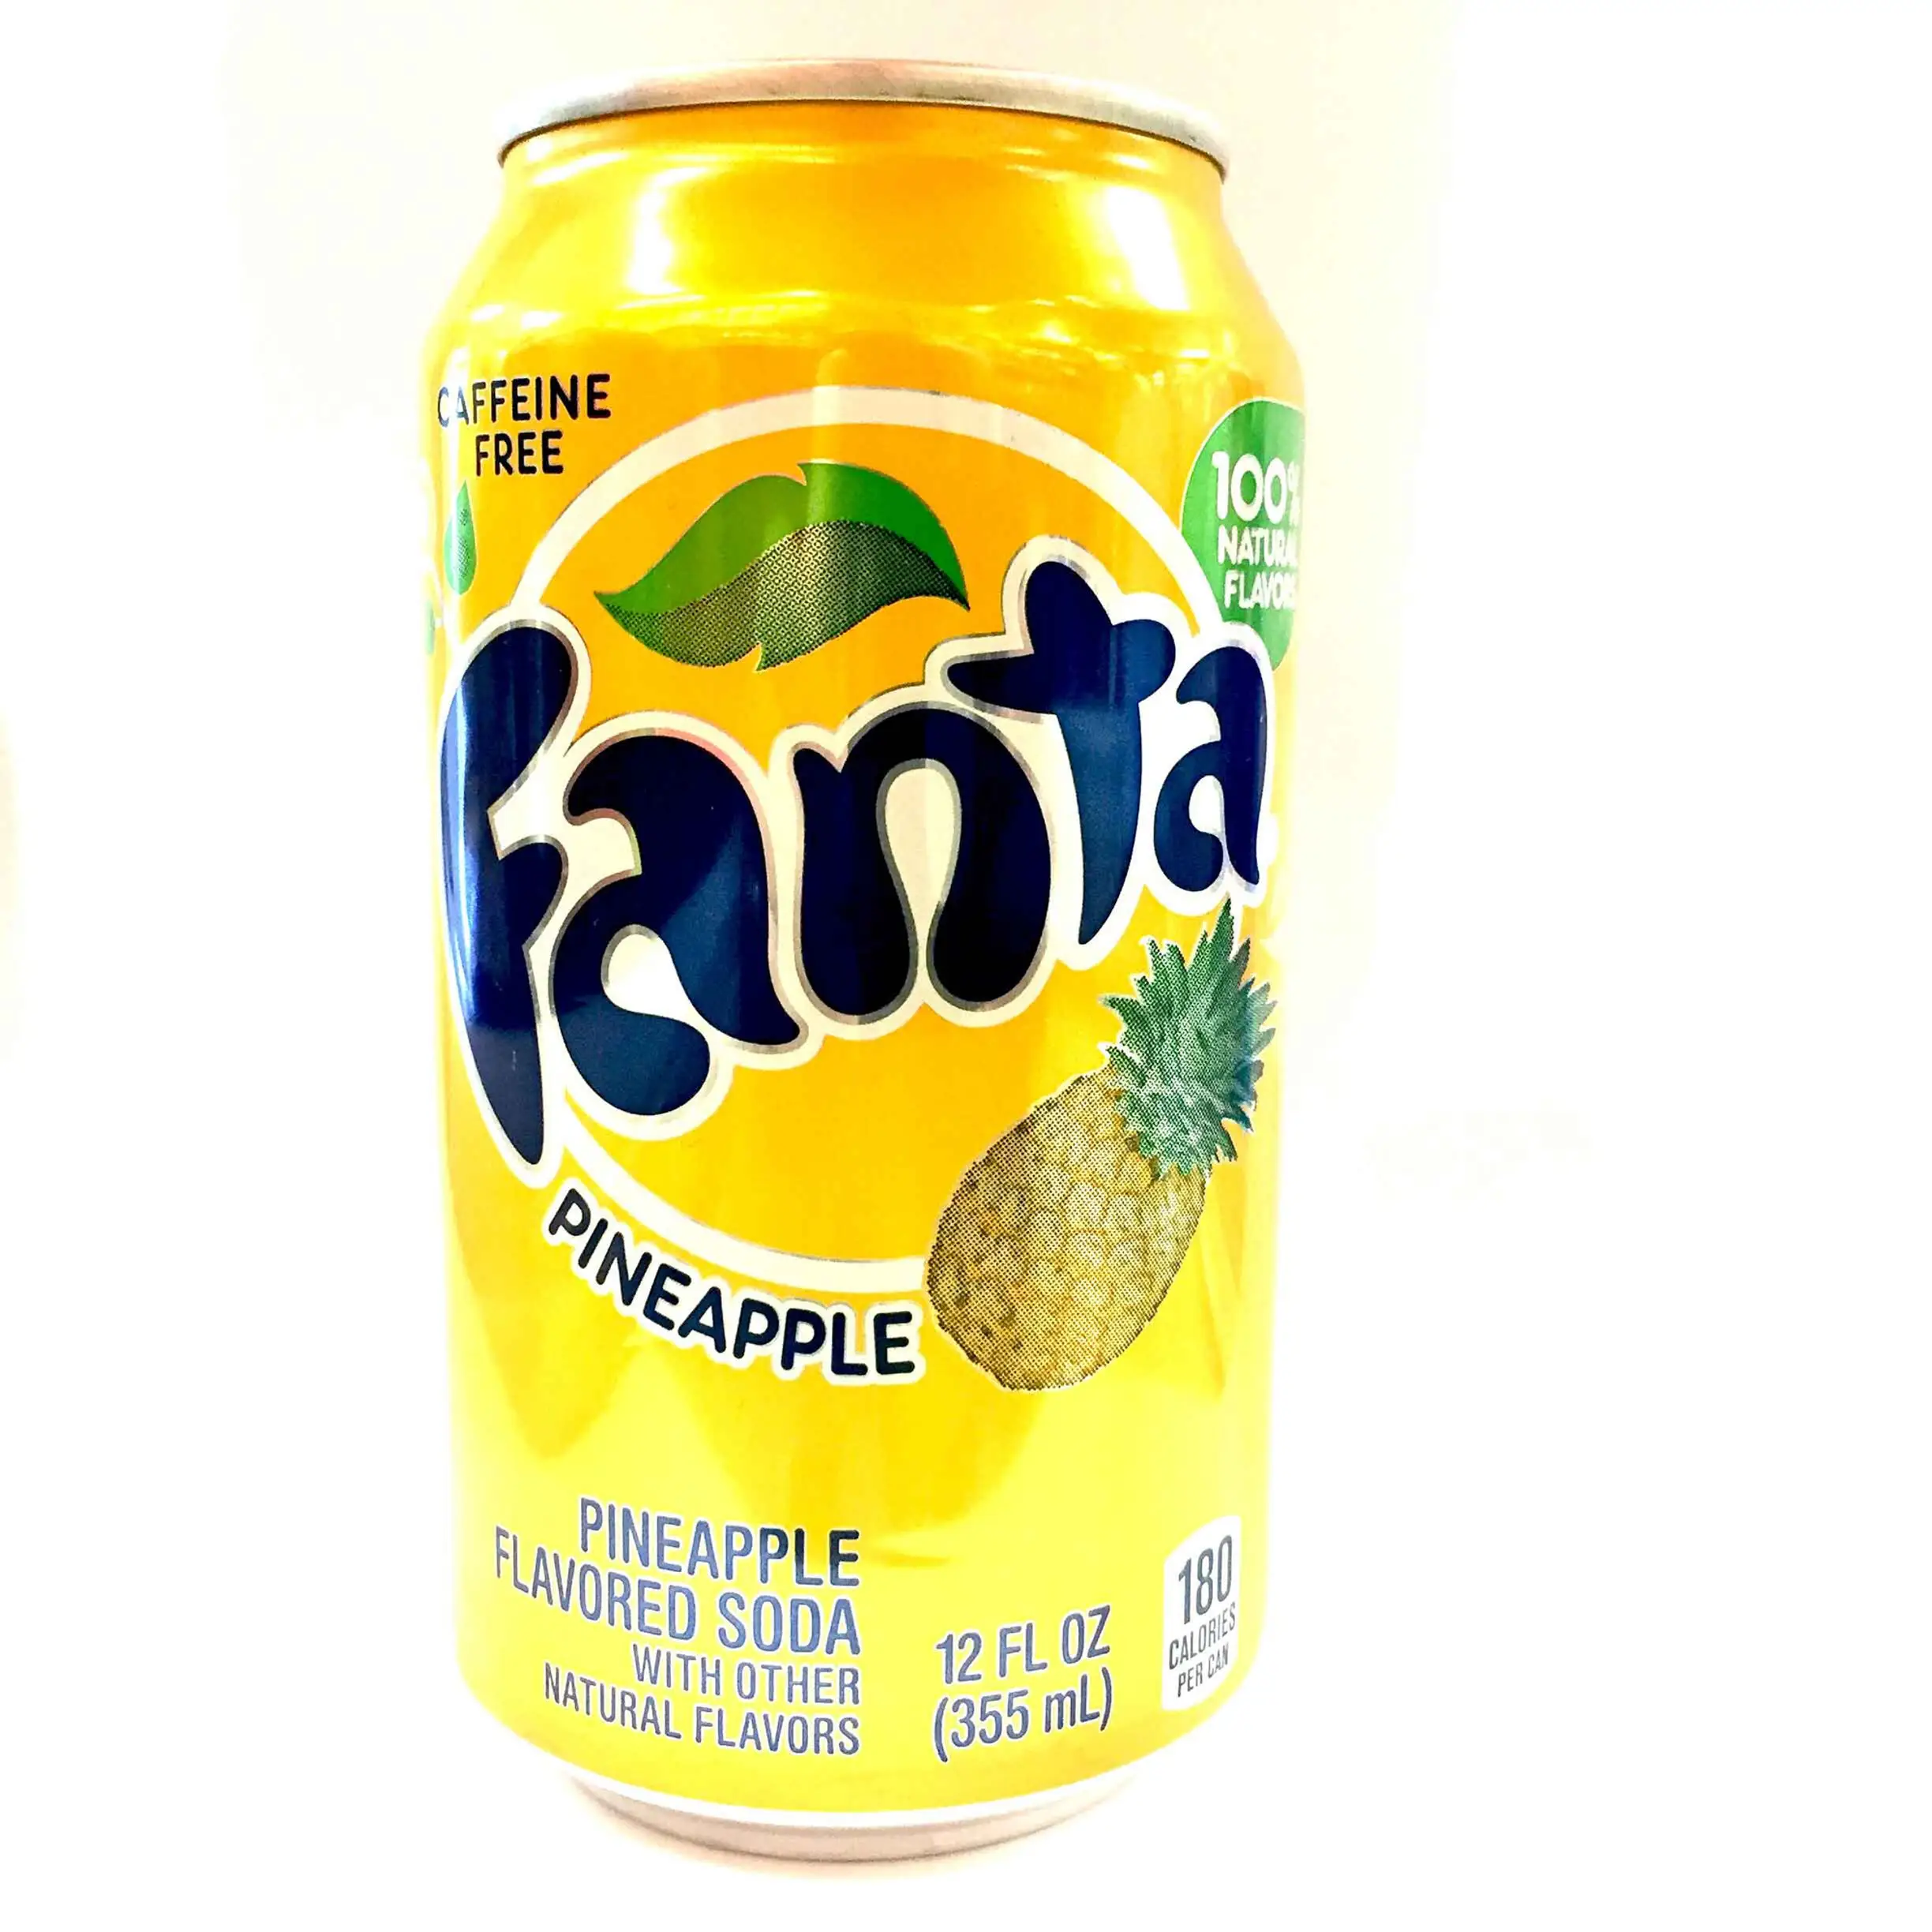 Fanta Soda américain 355 ml toutes les saveurs disponibles/Fanta américain toutes les tailles disponibles prix discount vente en gros